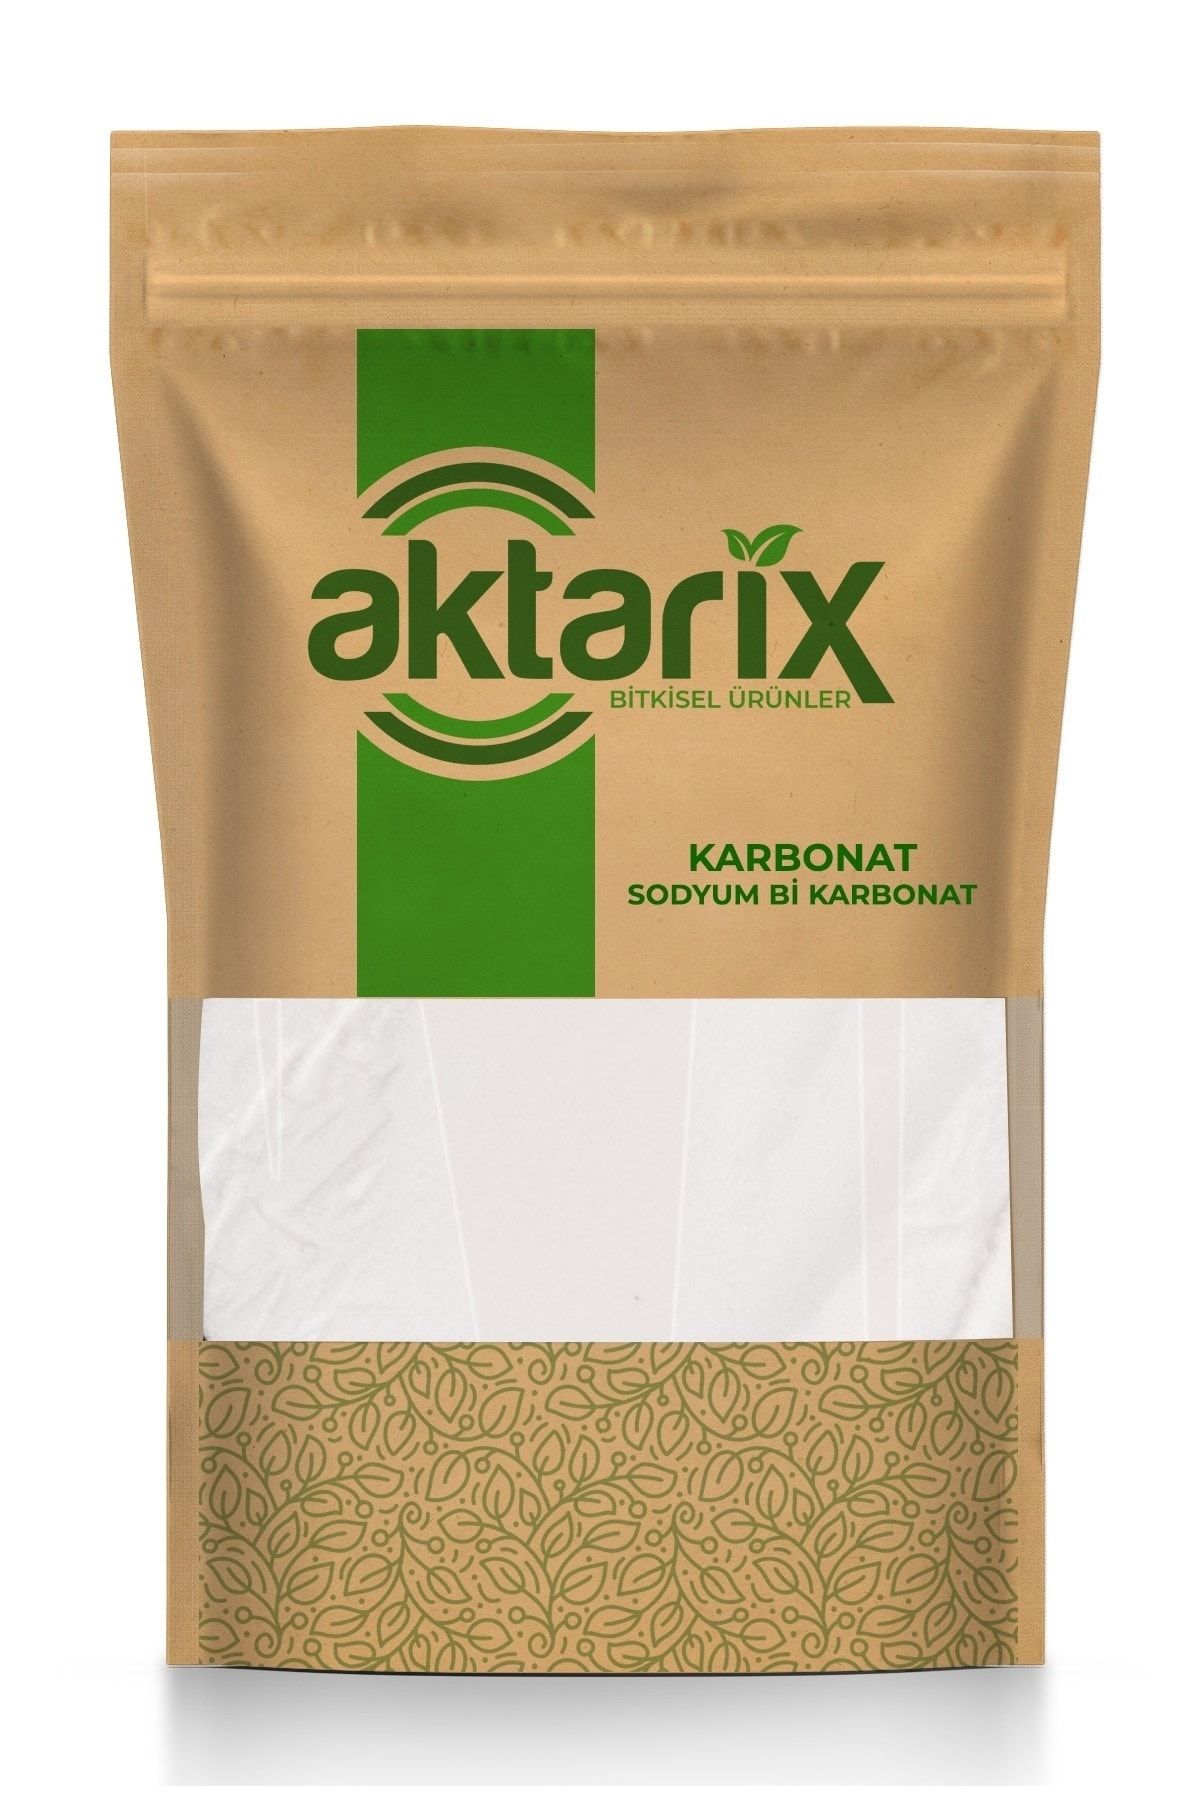 aktarix 3 Kg Karbonat / Gıda Tipi Içilebilir - Sodyum Bi Karbonat